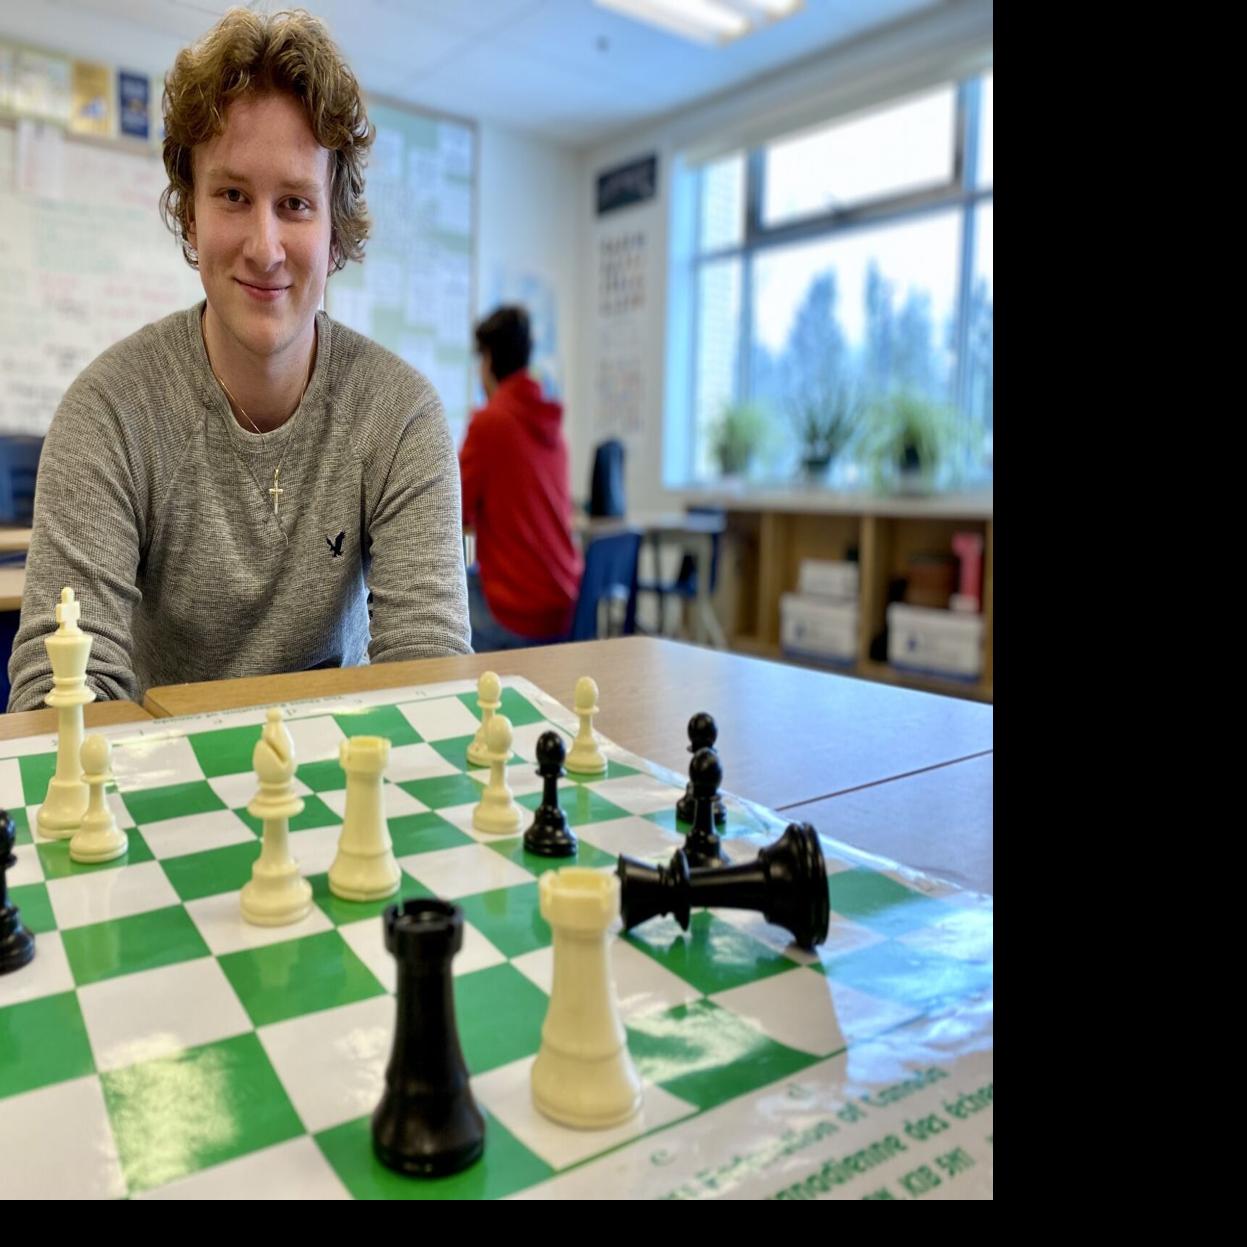 Queen's Gambit Chess Academy - Mauritius